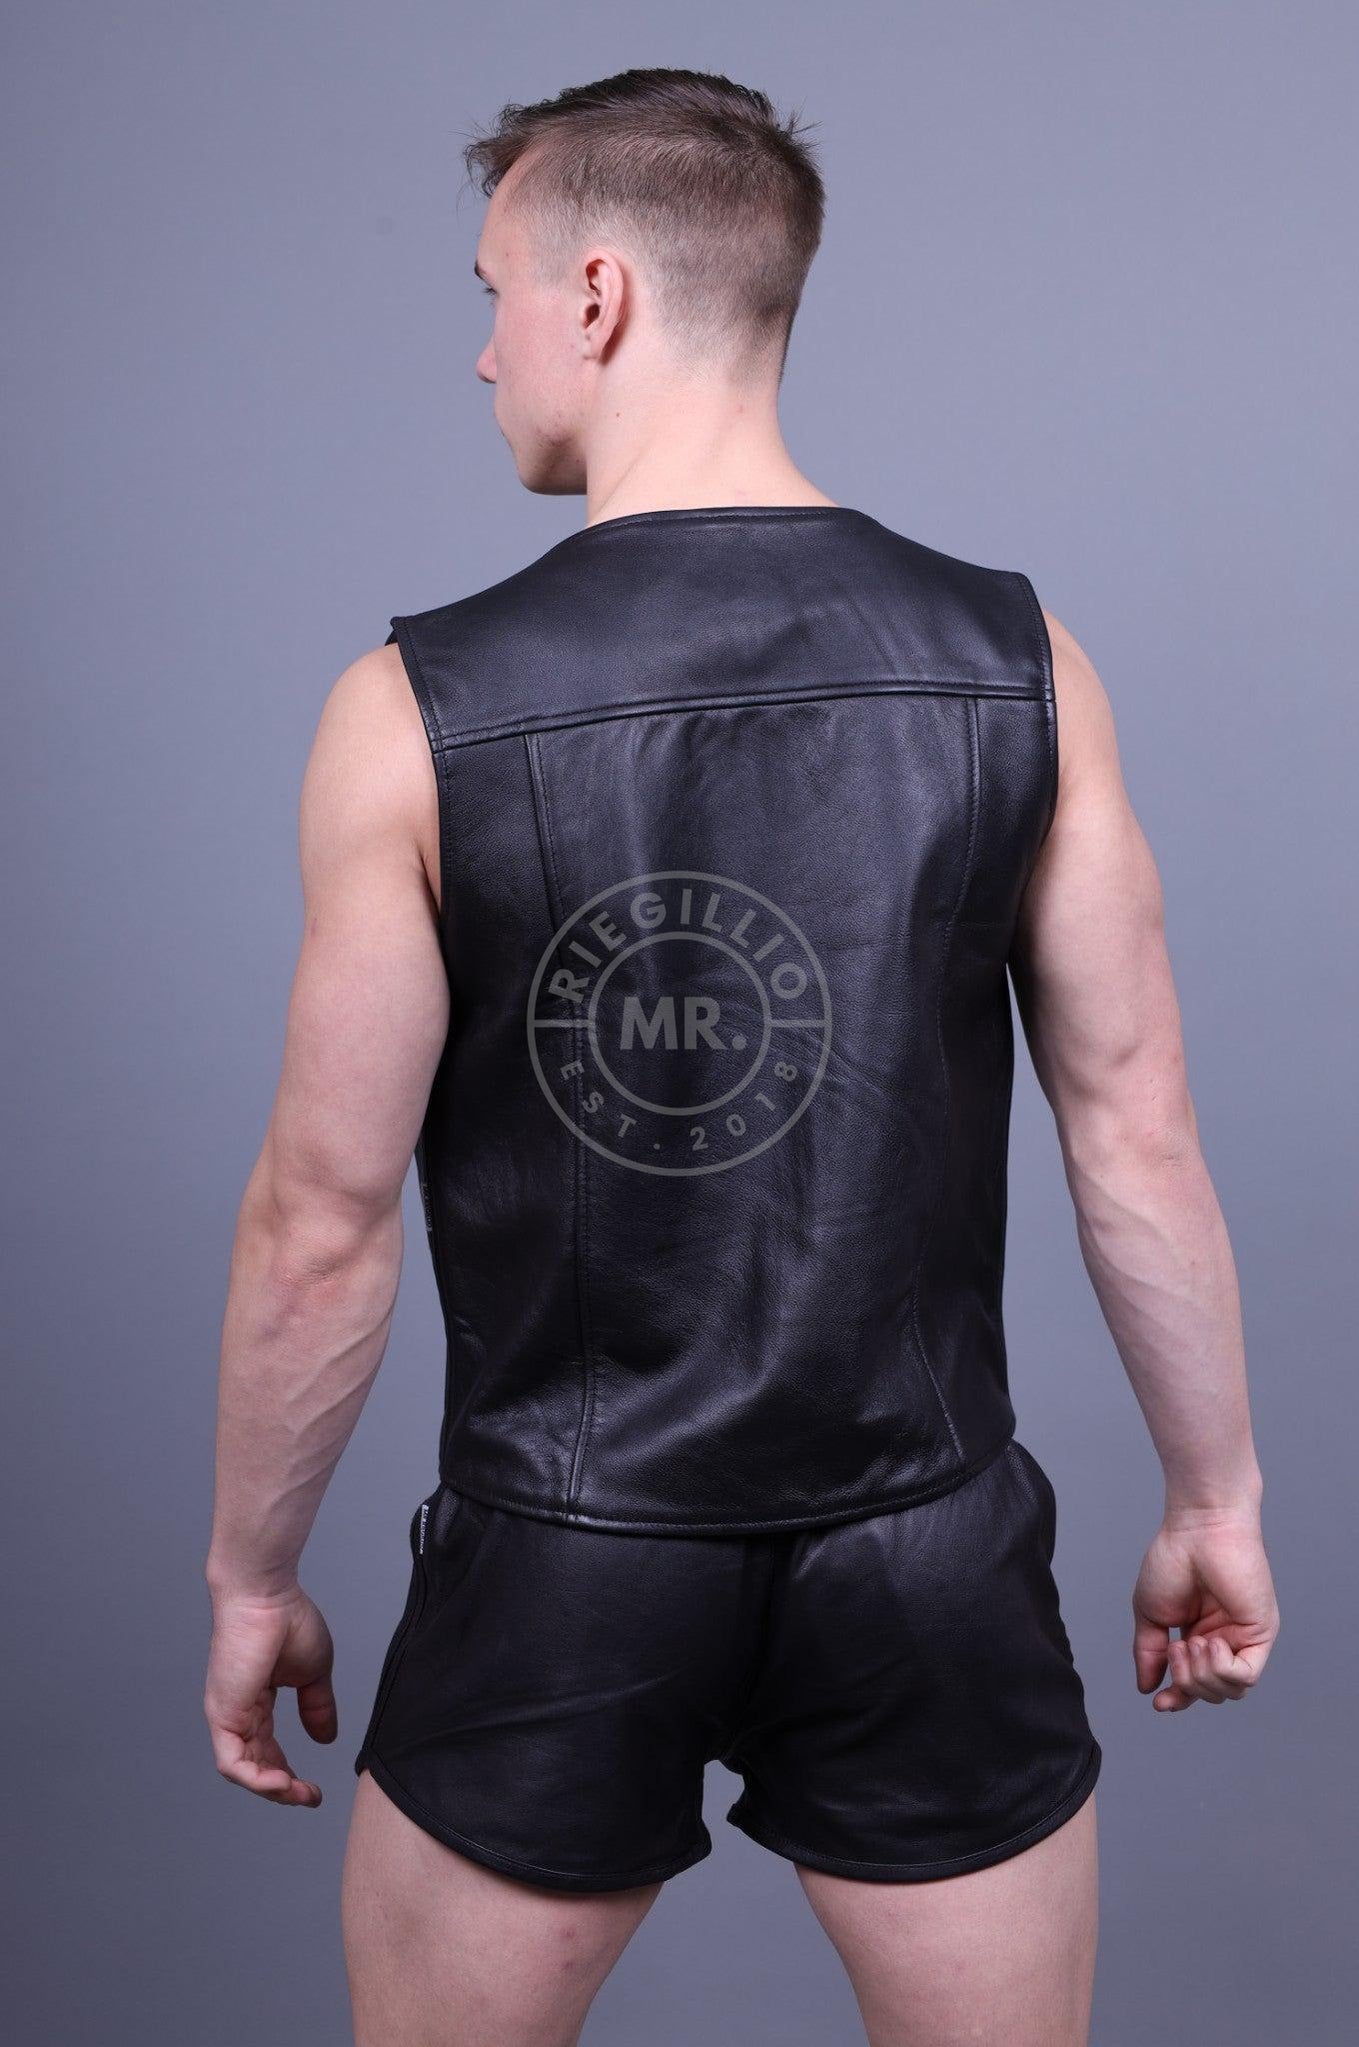 Leather Zipper Vest - Black at MR. Riegillio